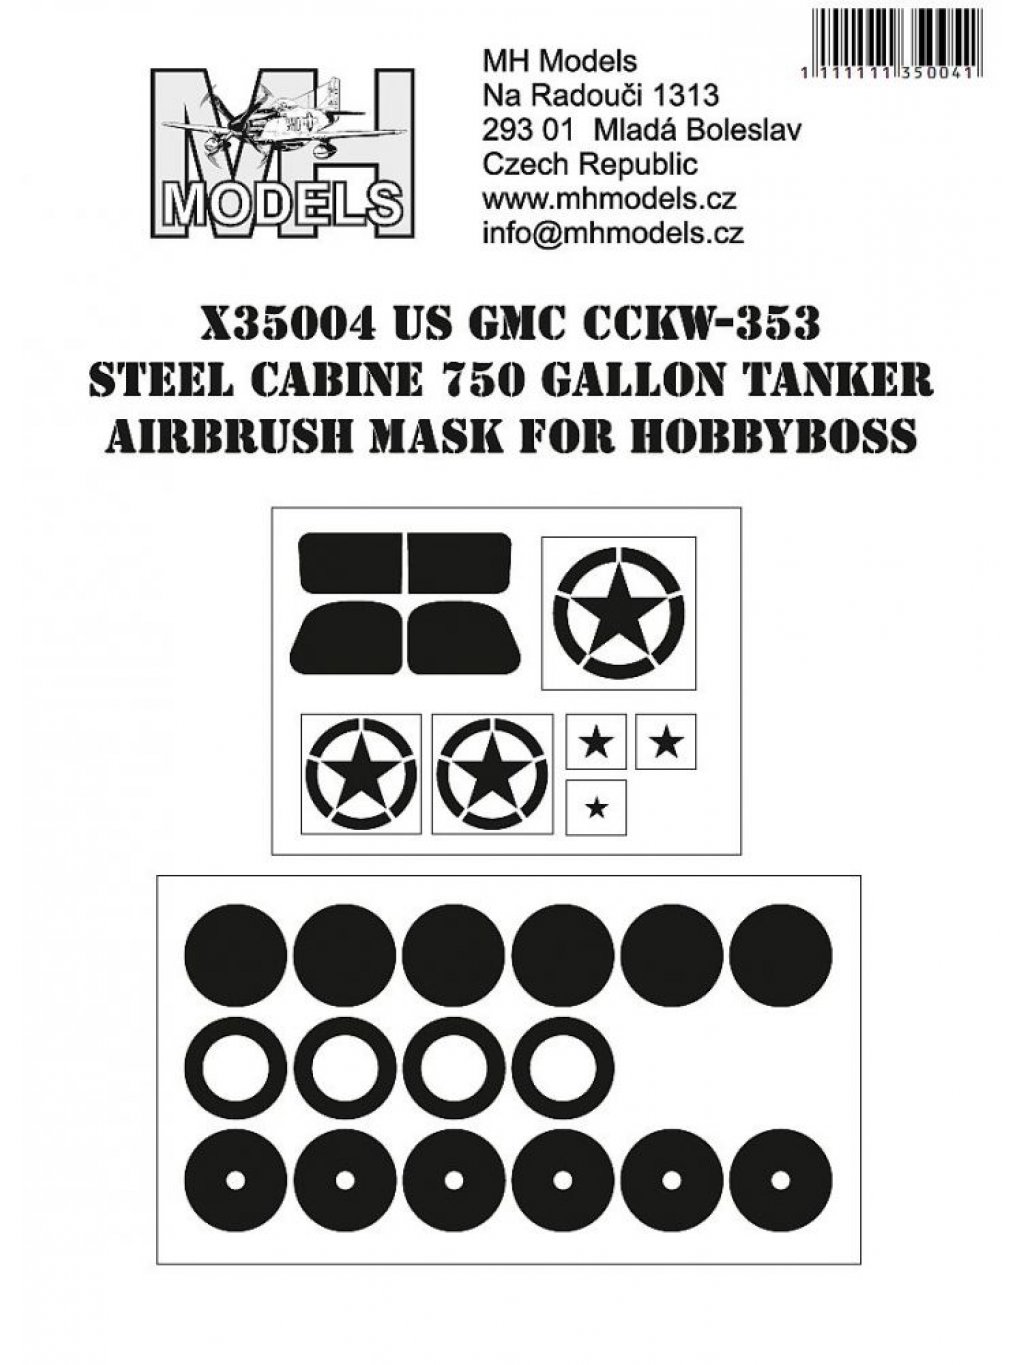 US GMC CCKW-352 Steel cabine 750 gallon tanker